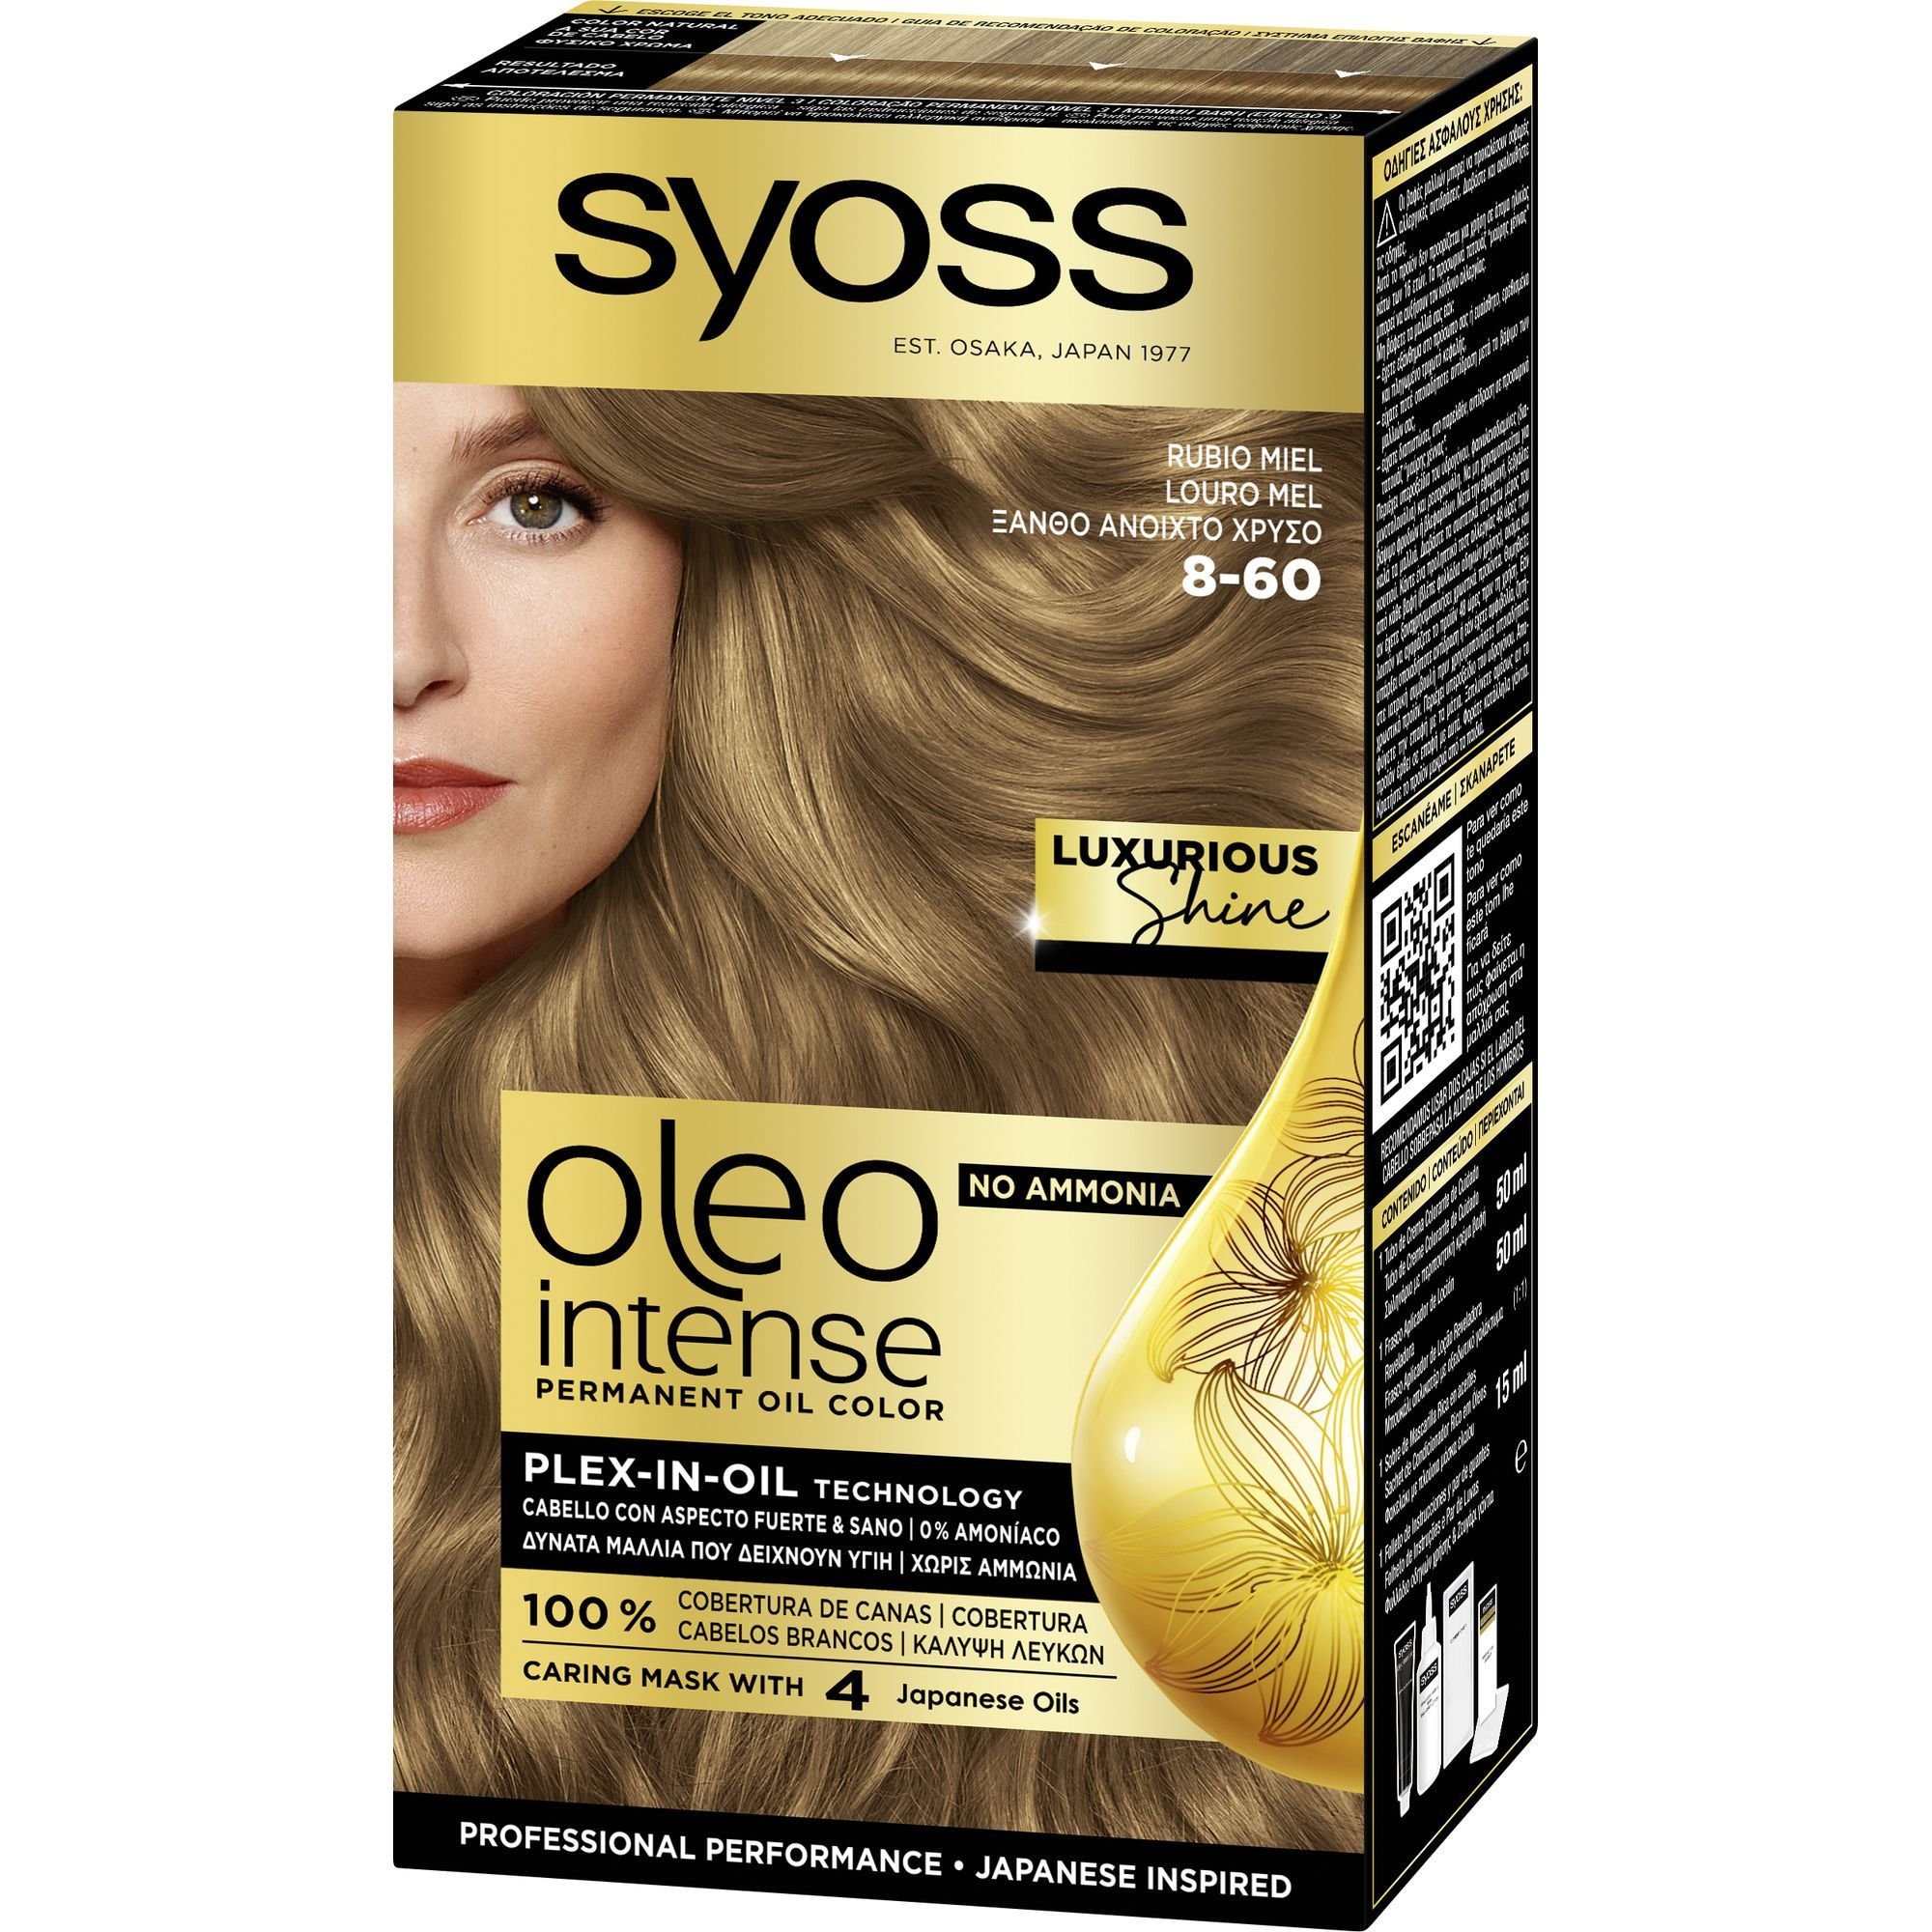 Syoss Syoss Oleo Intense Permanent Oil Hair Color Kit Επαγγελματική Μόνιμη Βαφή Μαλλιών για Εξαιρετική Κάλυψη & Έντονο Χρώμα που Διαρκεί, Χωρίς Αμμωνία 1 Τεμάχιο - 8-60 Ξανθό Ανοιχτό Χρυσό